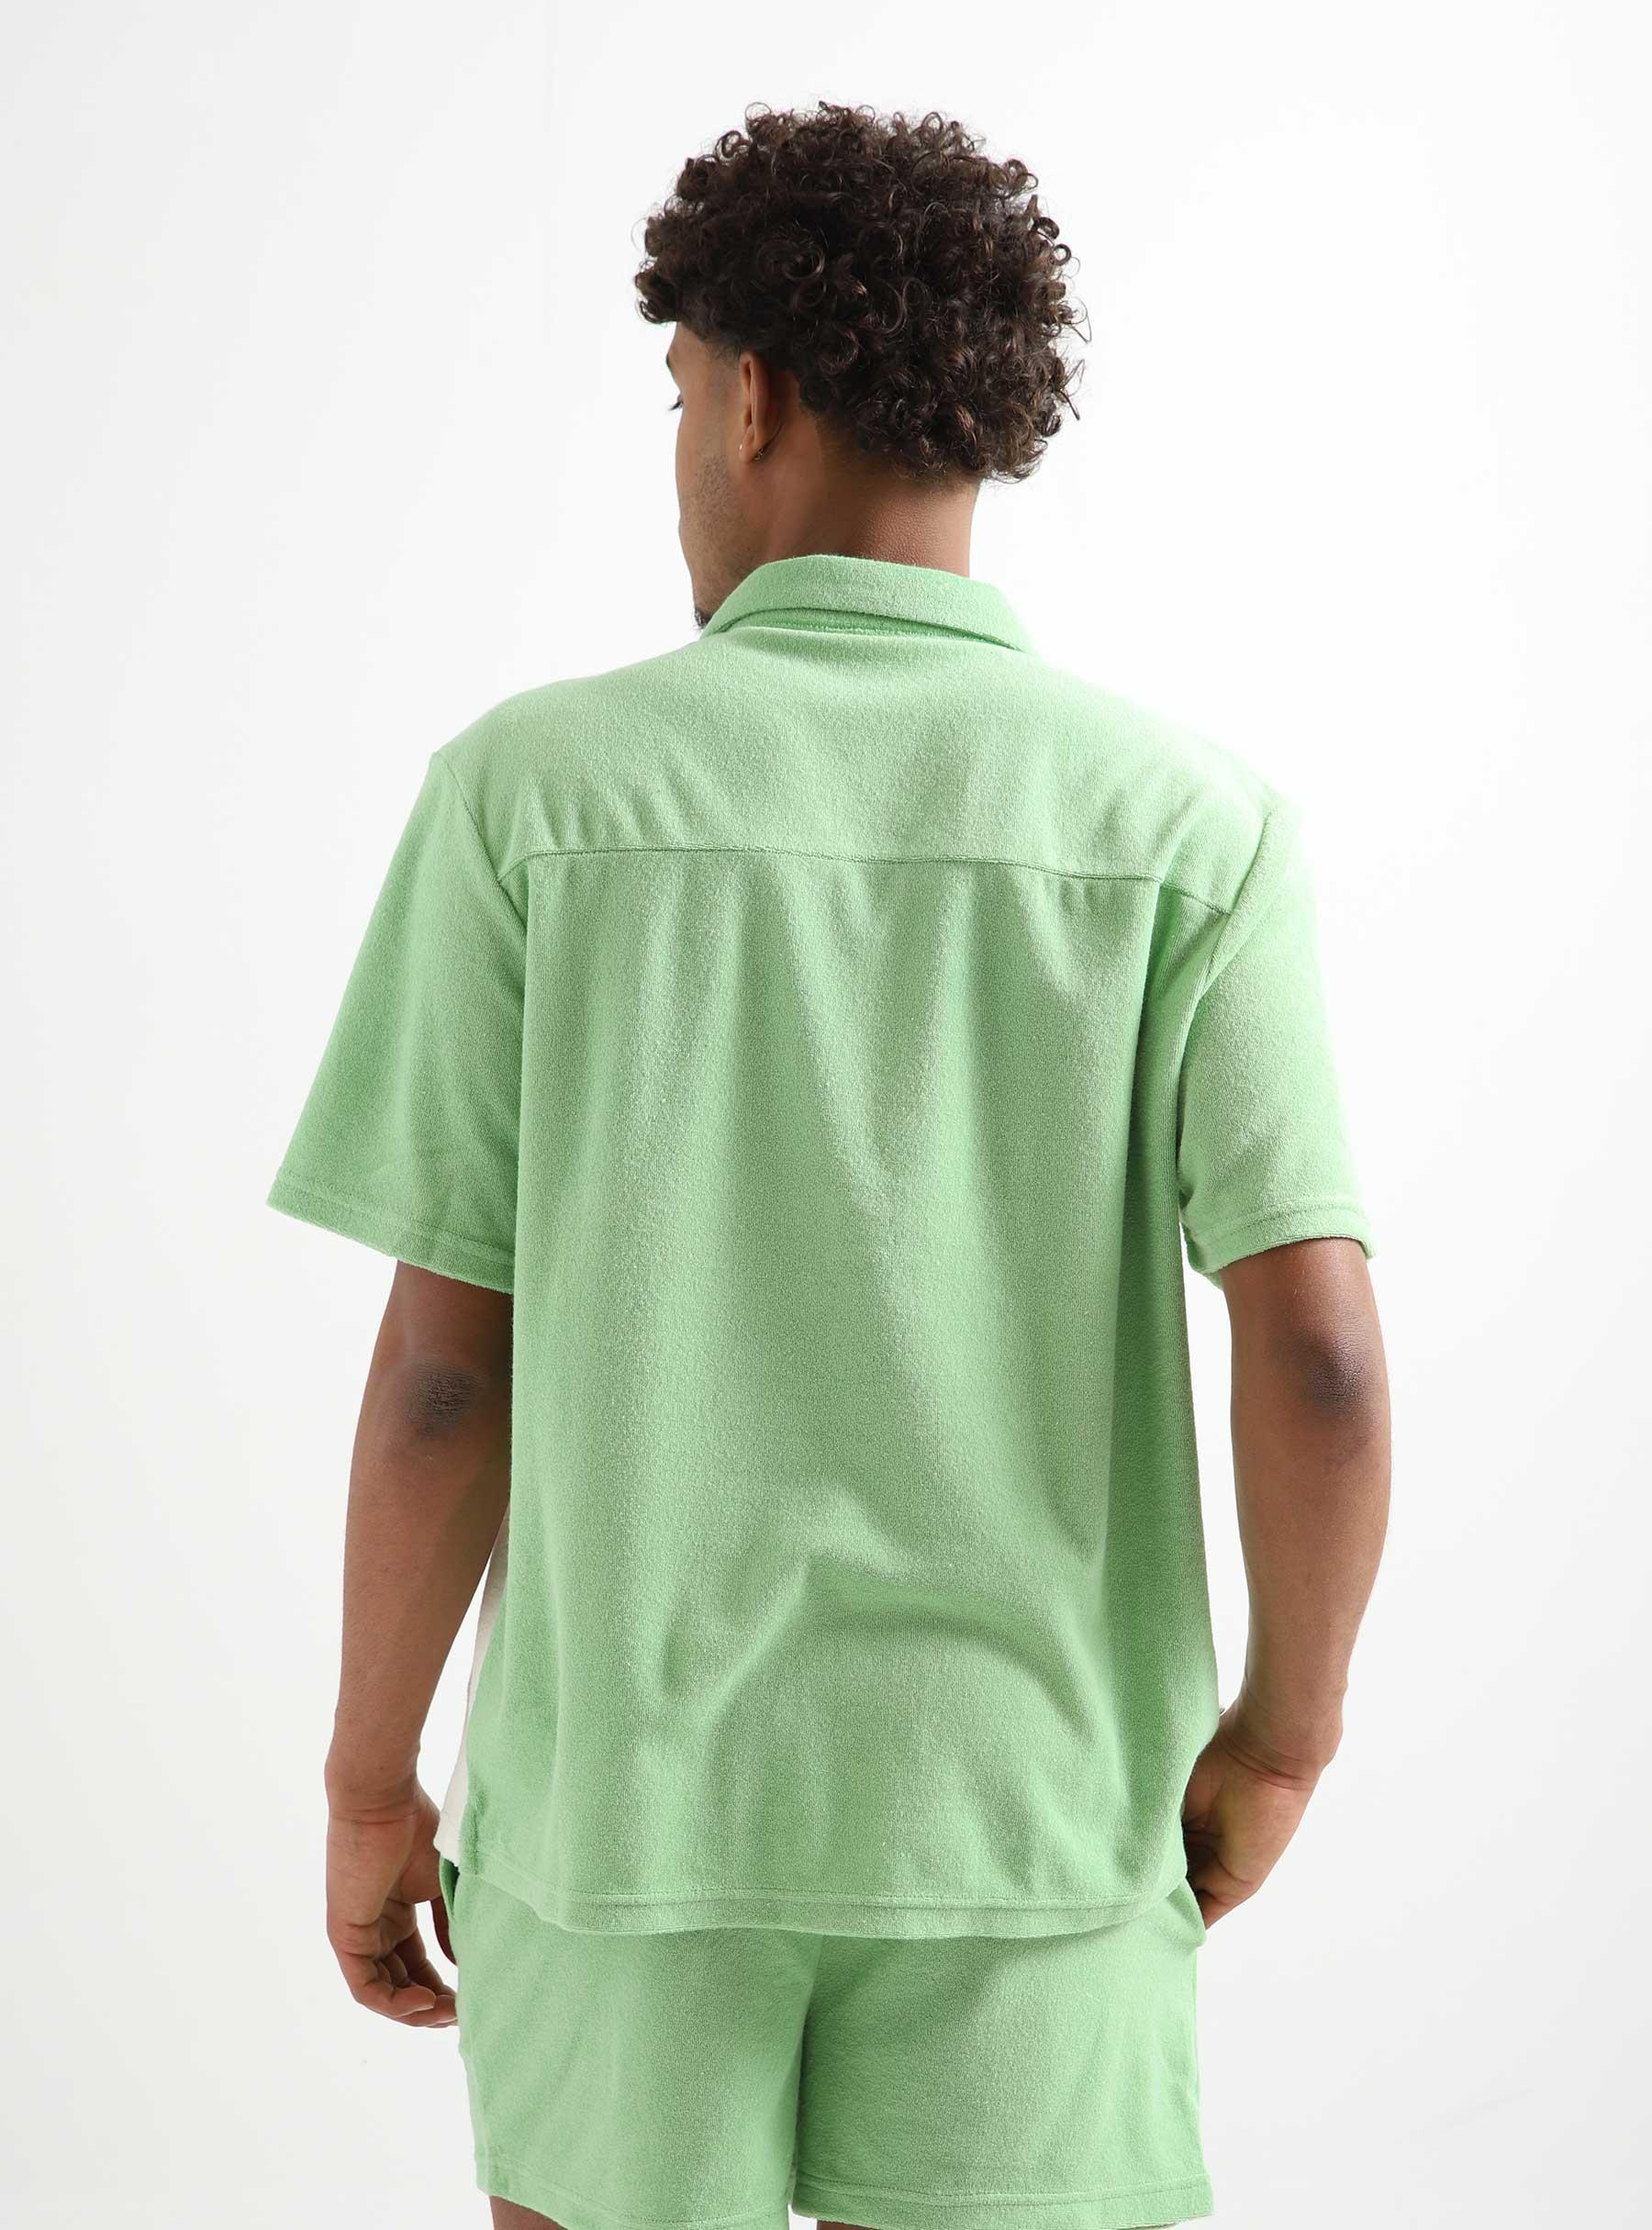 Tano Shortsleeve Shirt Quiet Green Gardenia 18431-822